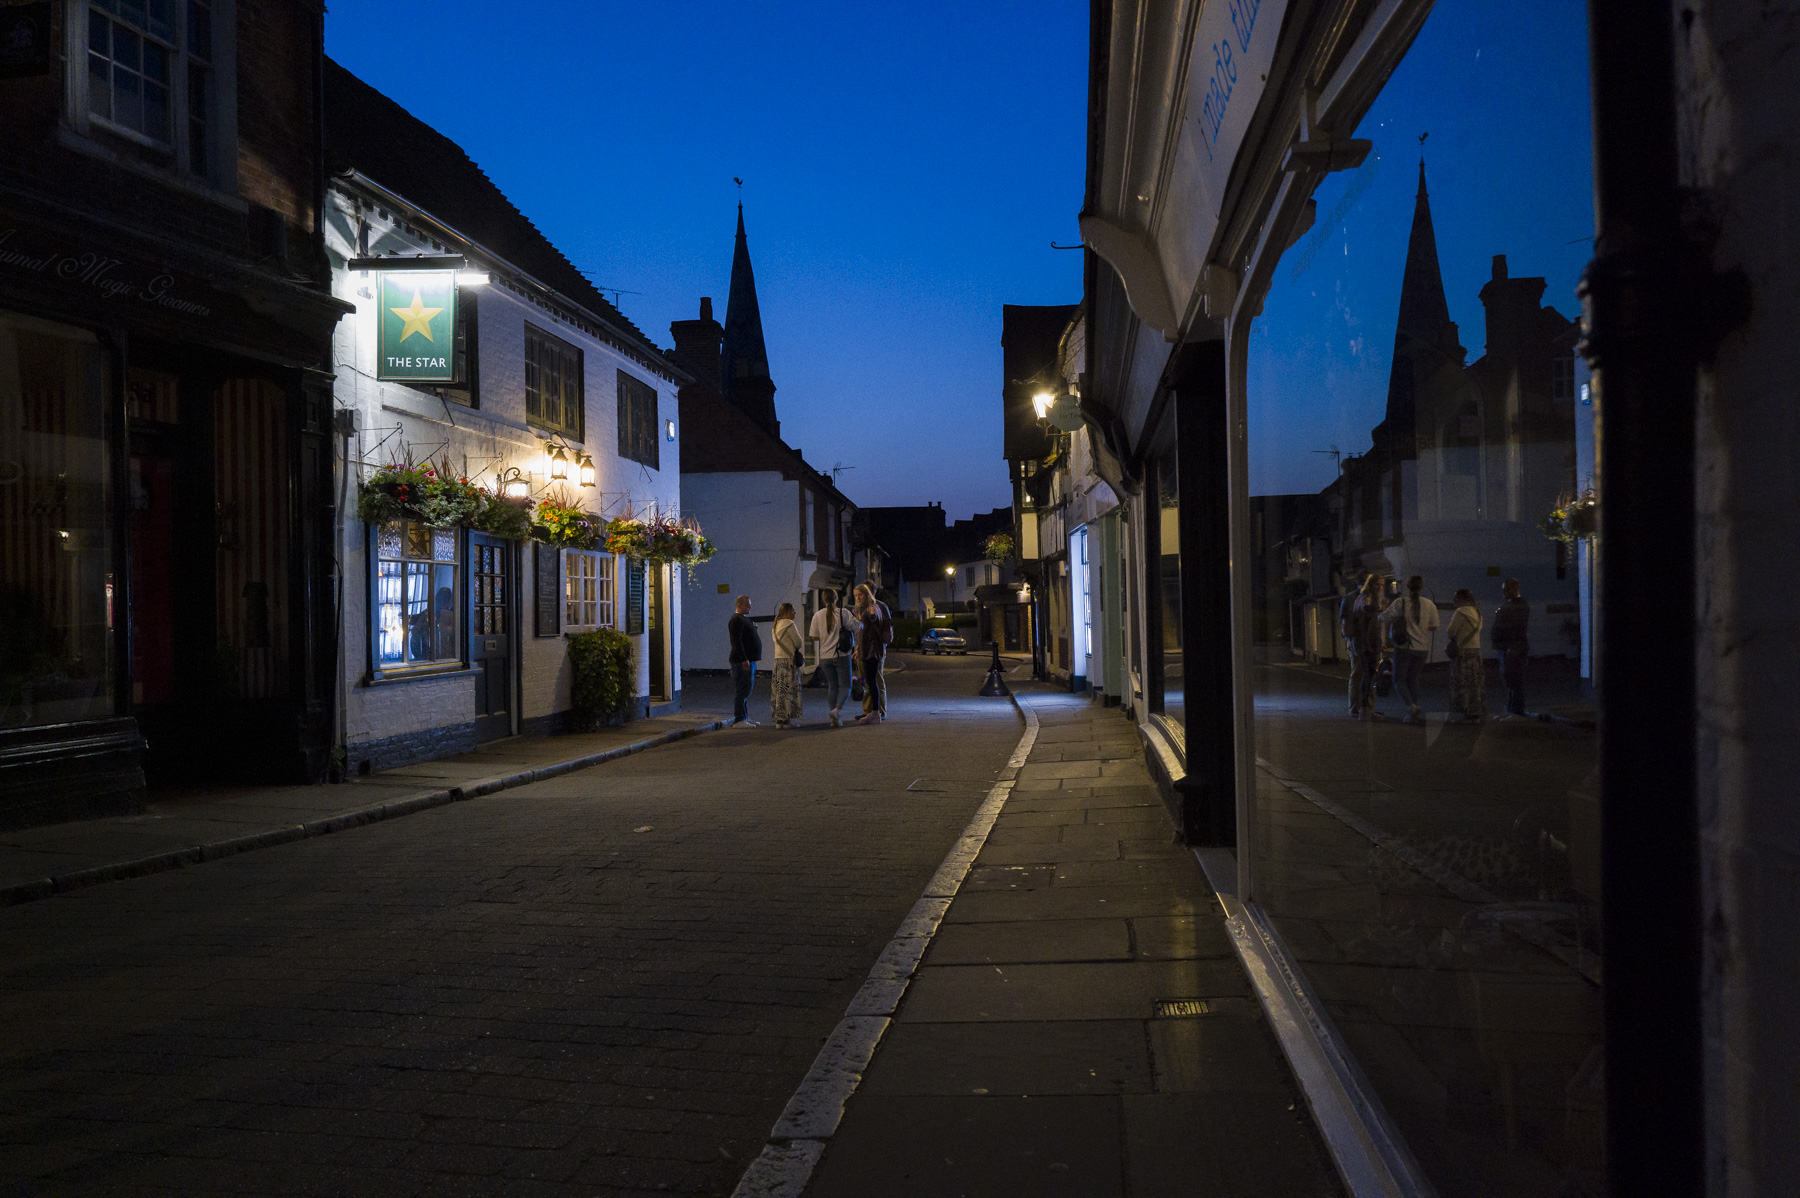 Night street photo using Leica Q3's ISO 6400 setting